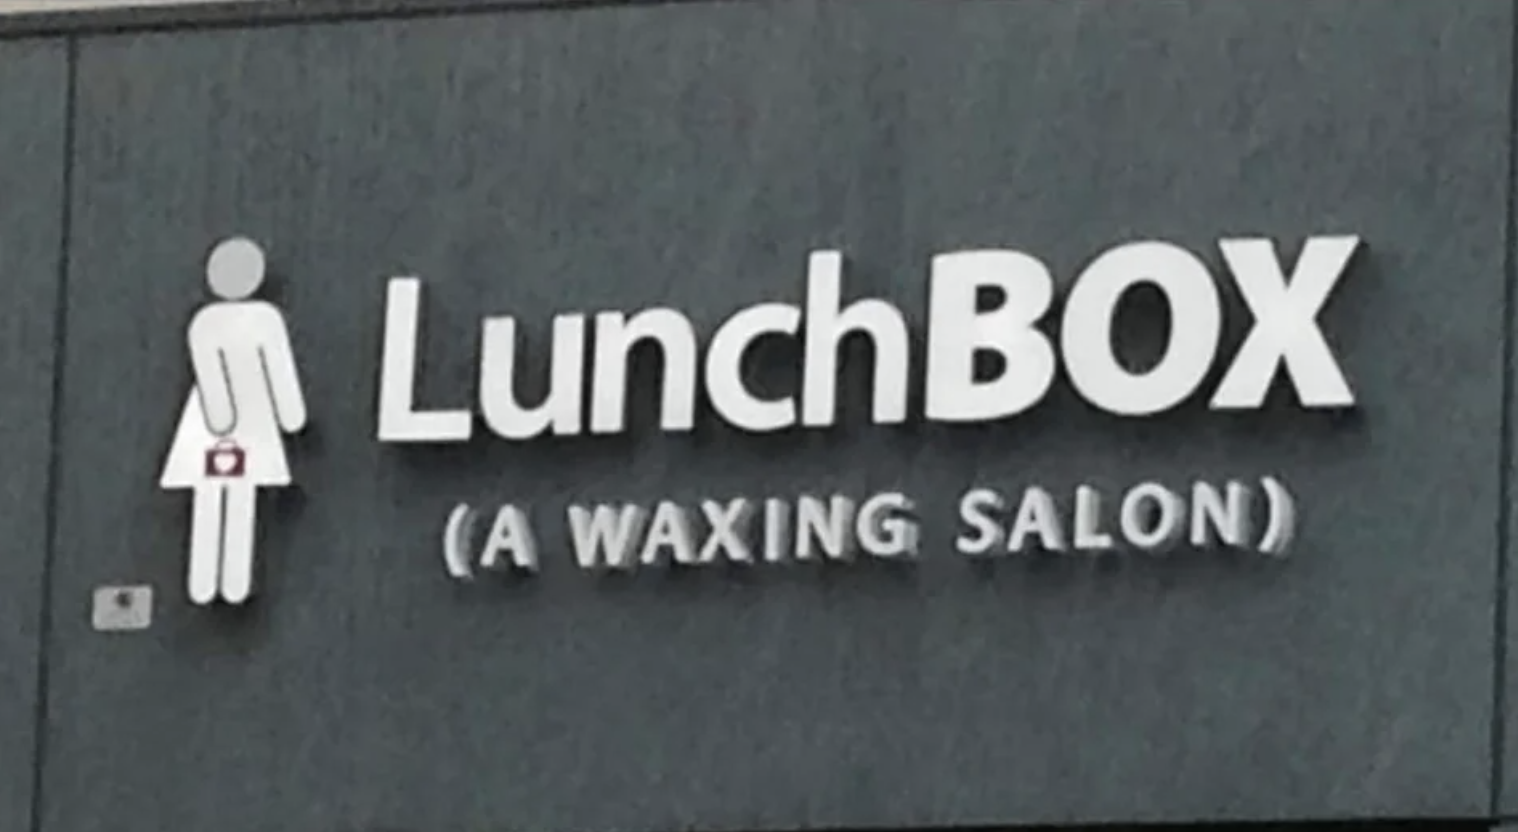 lunch box, a waxing salon